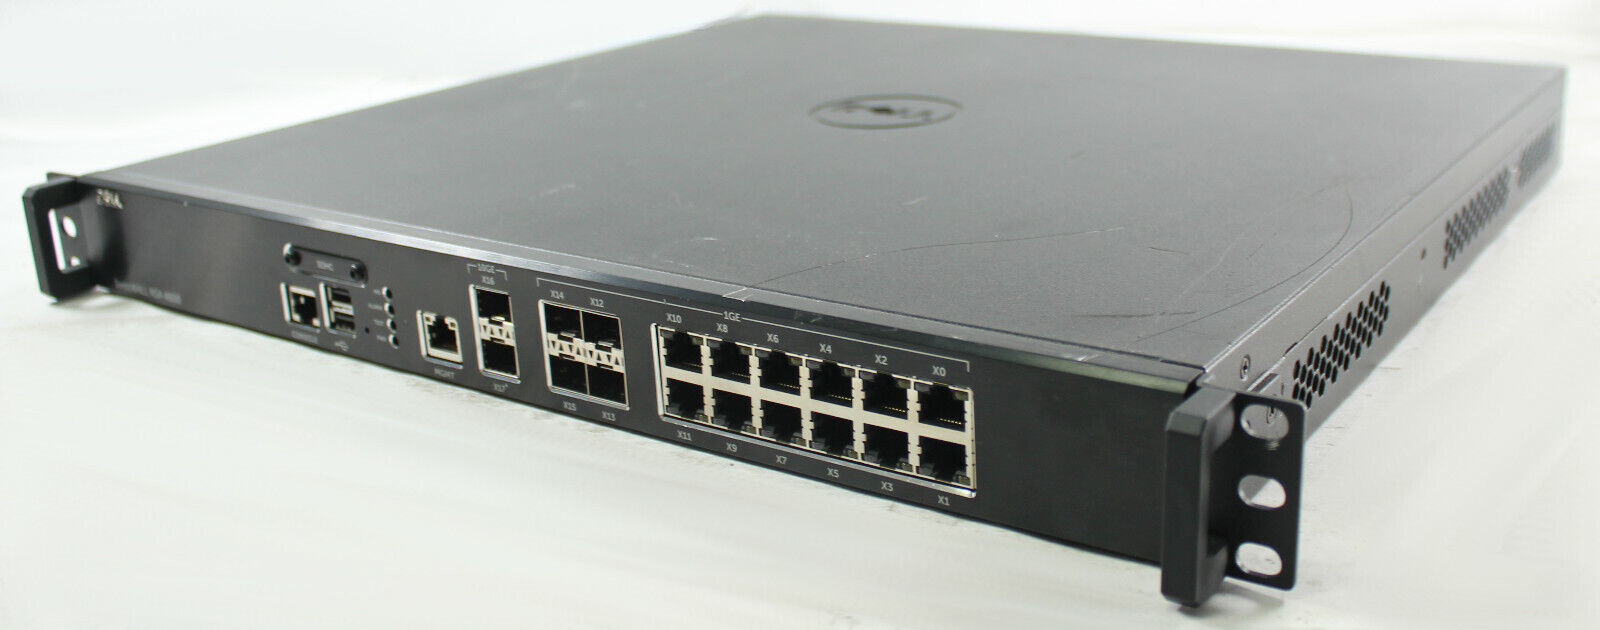 SonicWALL NSA 4600 Network Security Appliance Firewall - 1RK26-0A3